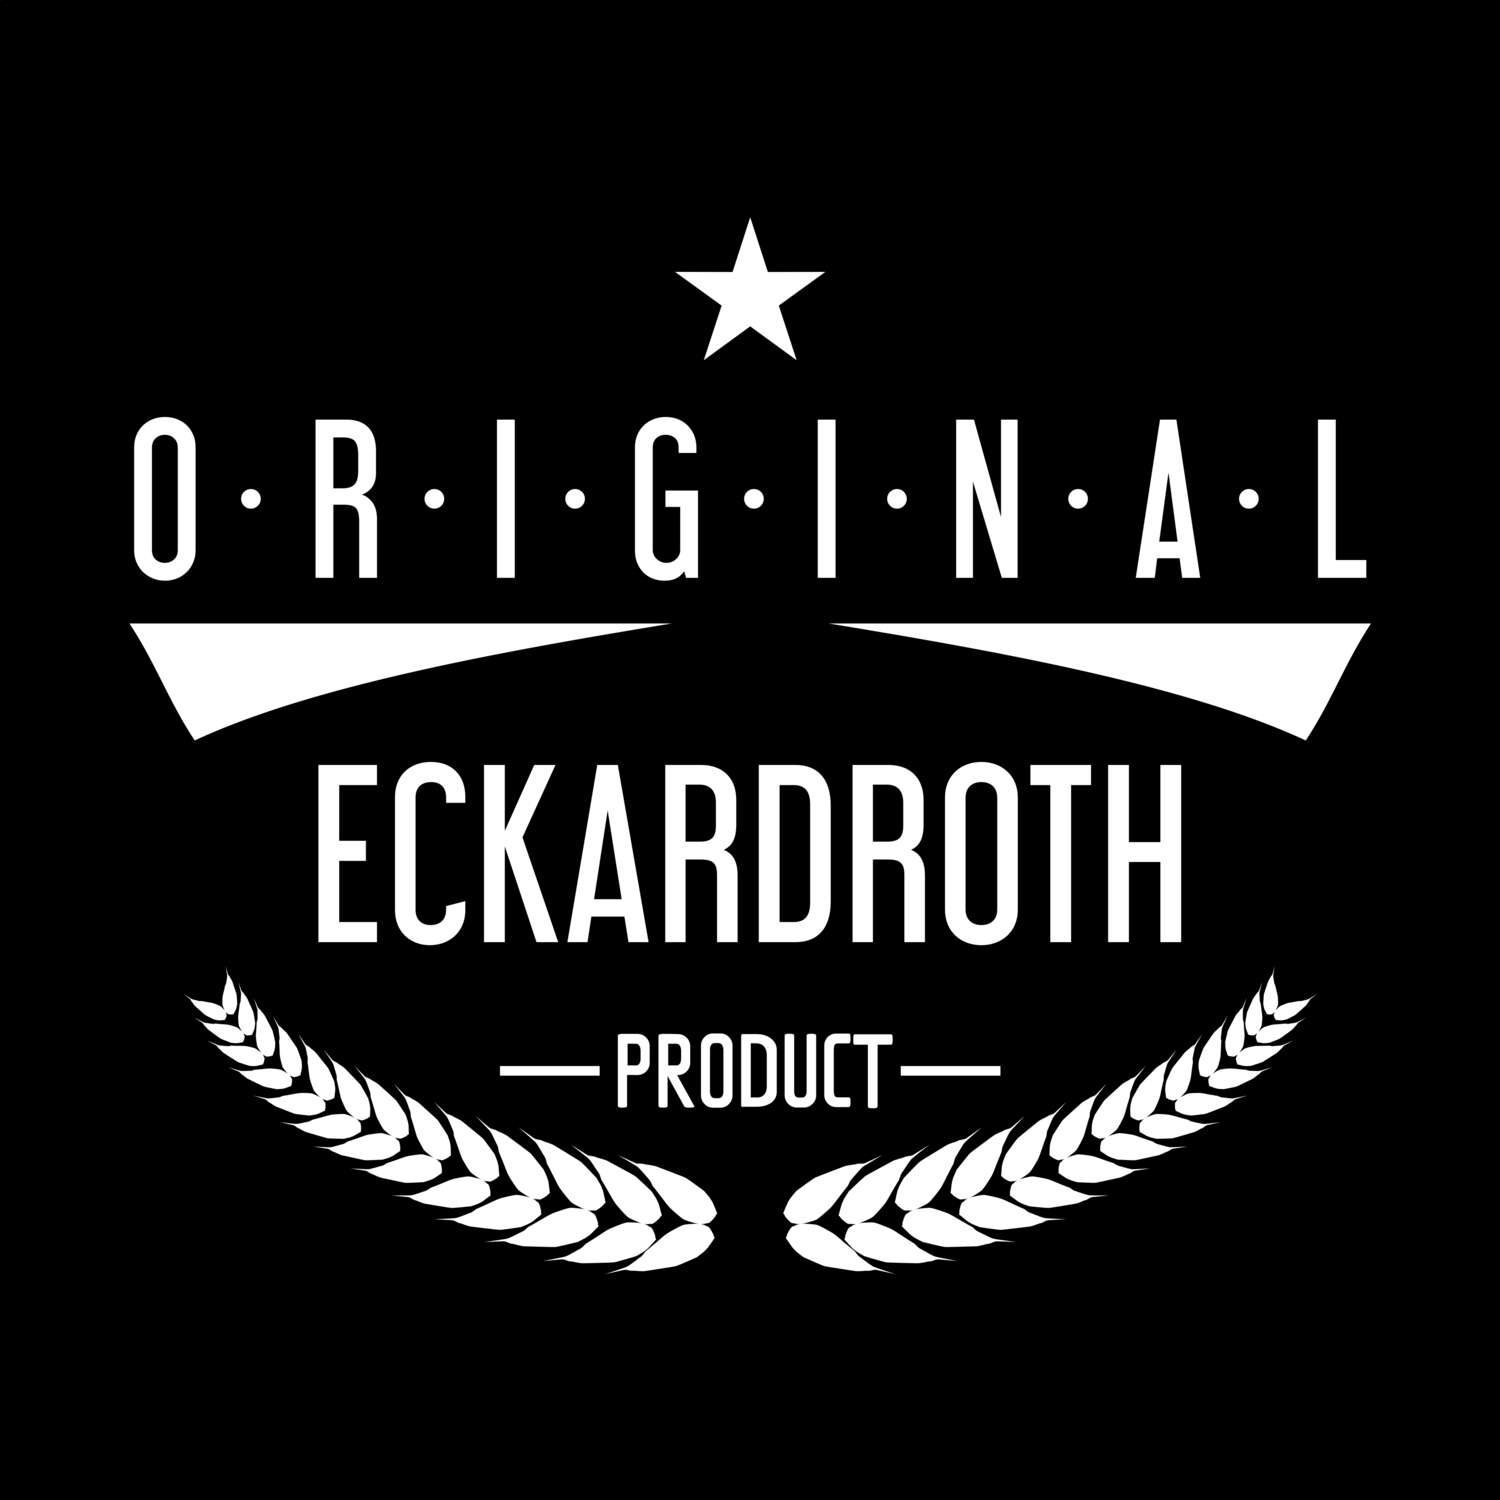 Eckardroth T-Shirt »Original Product«